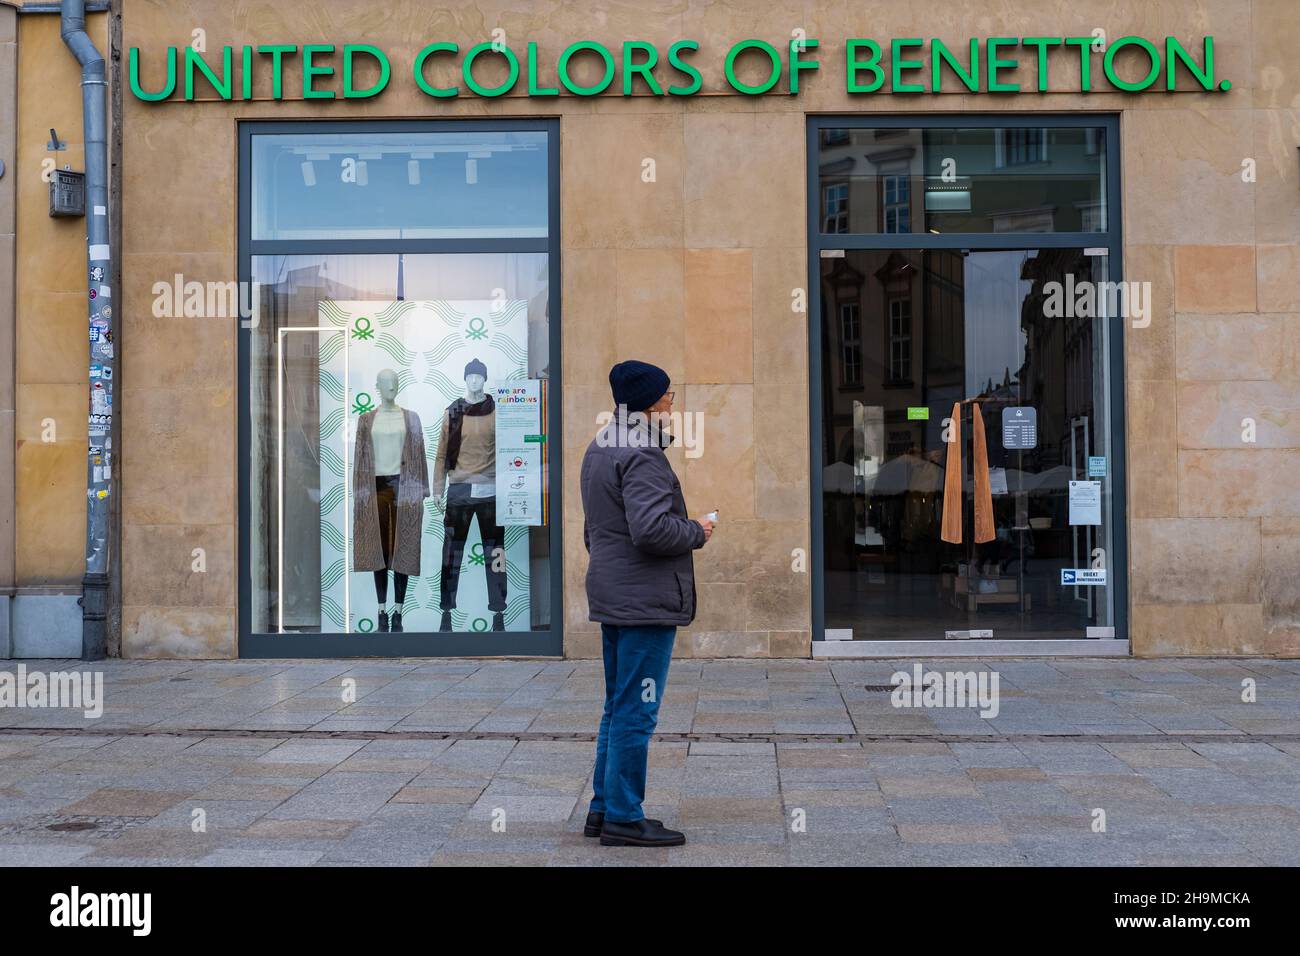 United colors of benetton fotografías e imágenes de alta resolución - Alamy